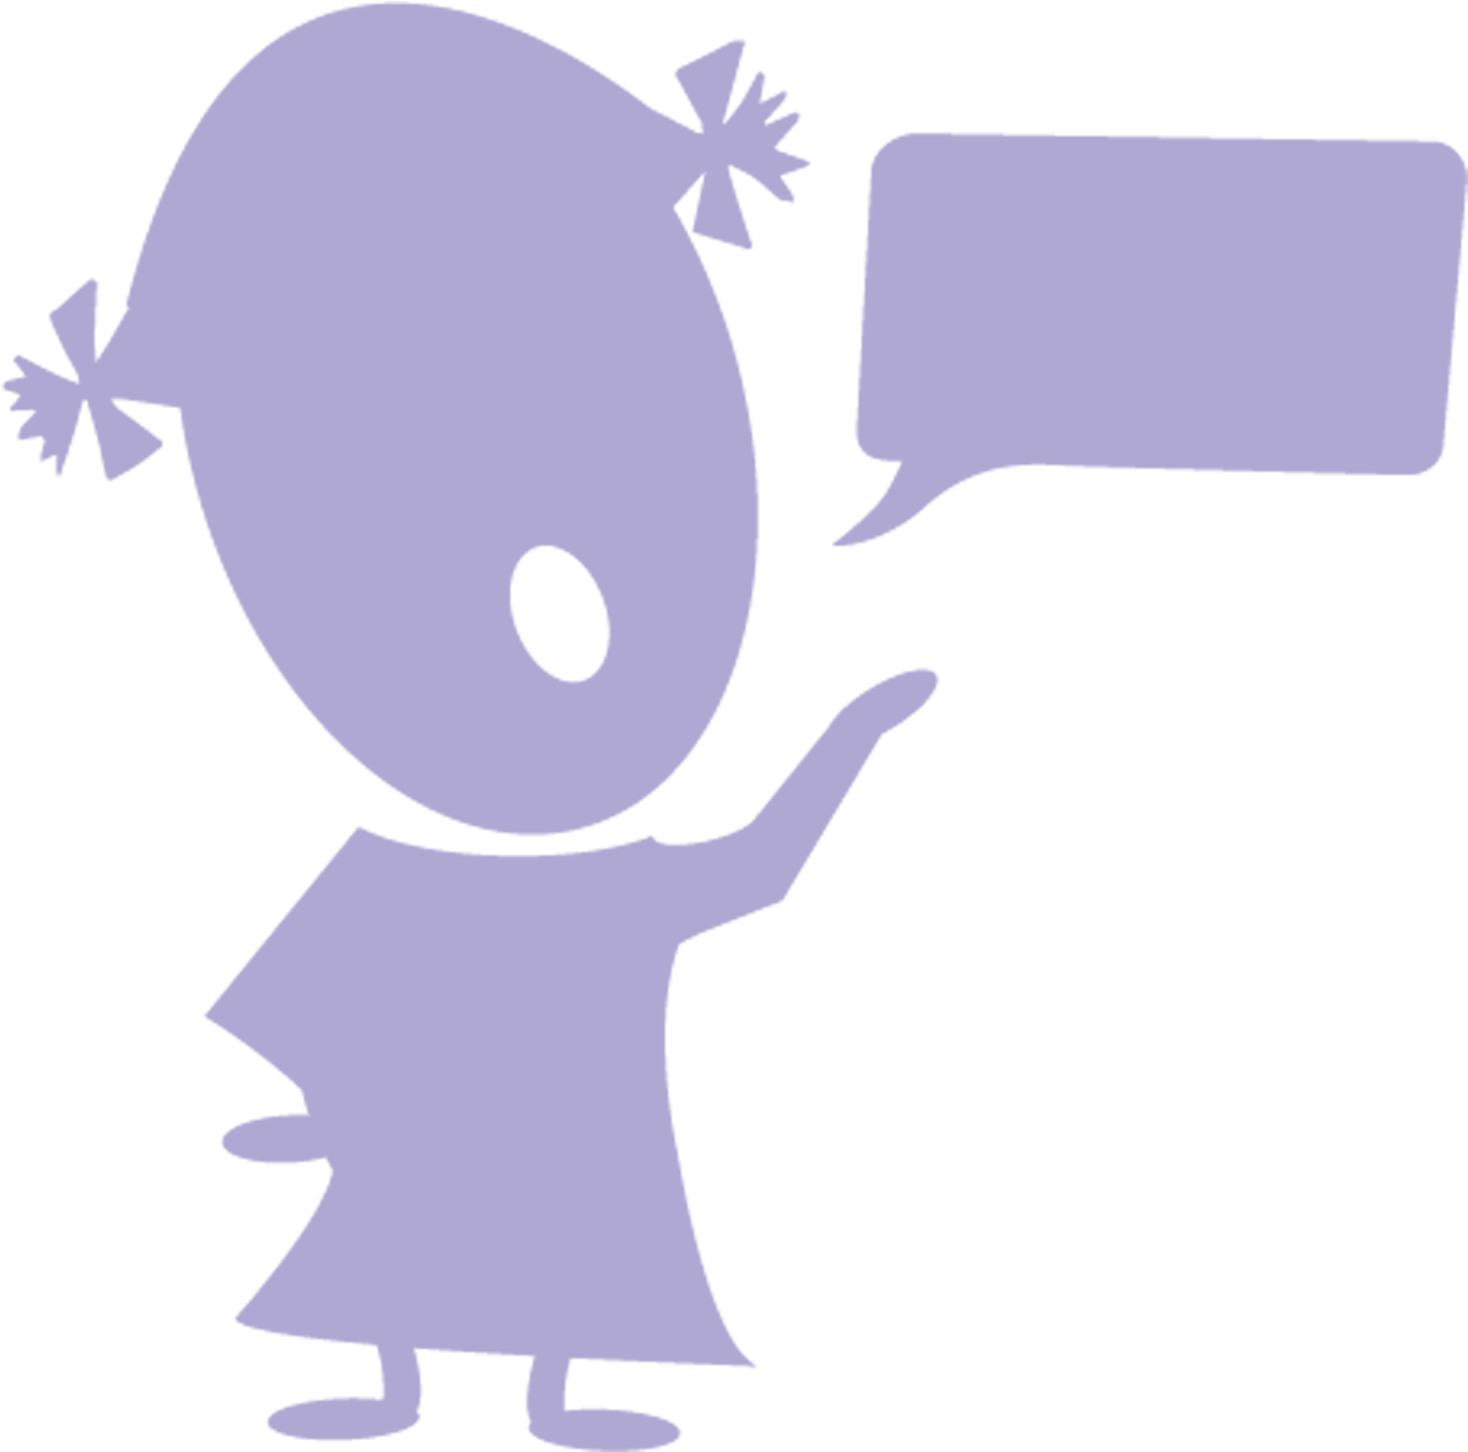 A Cartoon Of A Girl With A Speech Bubble